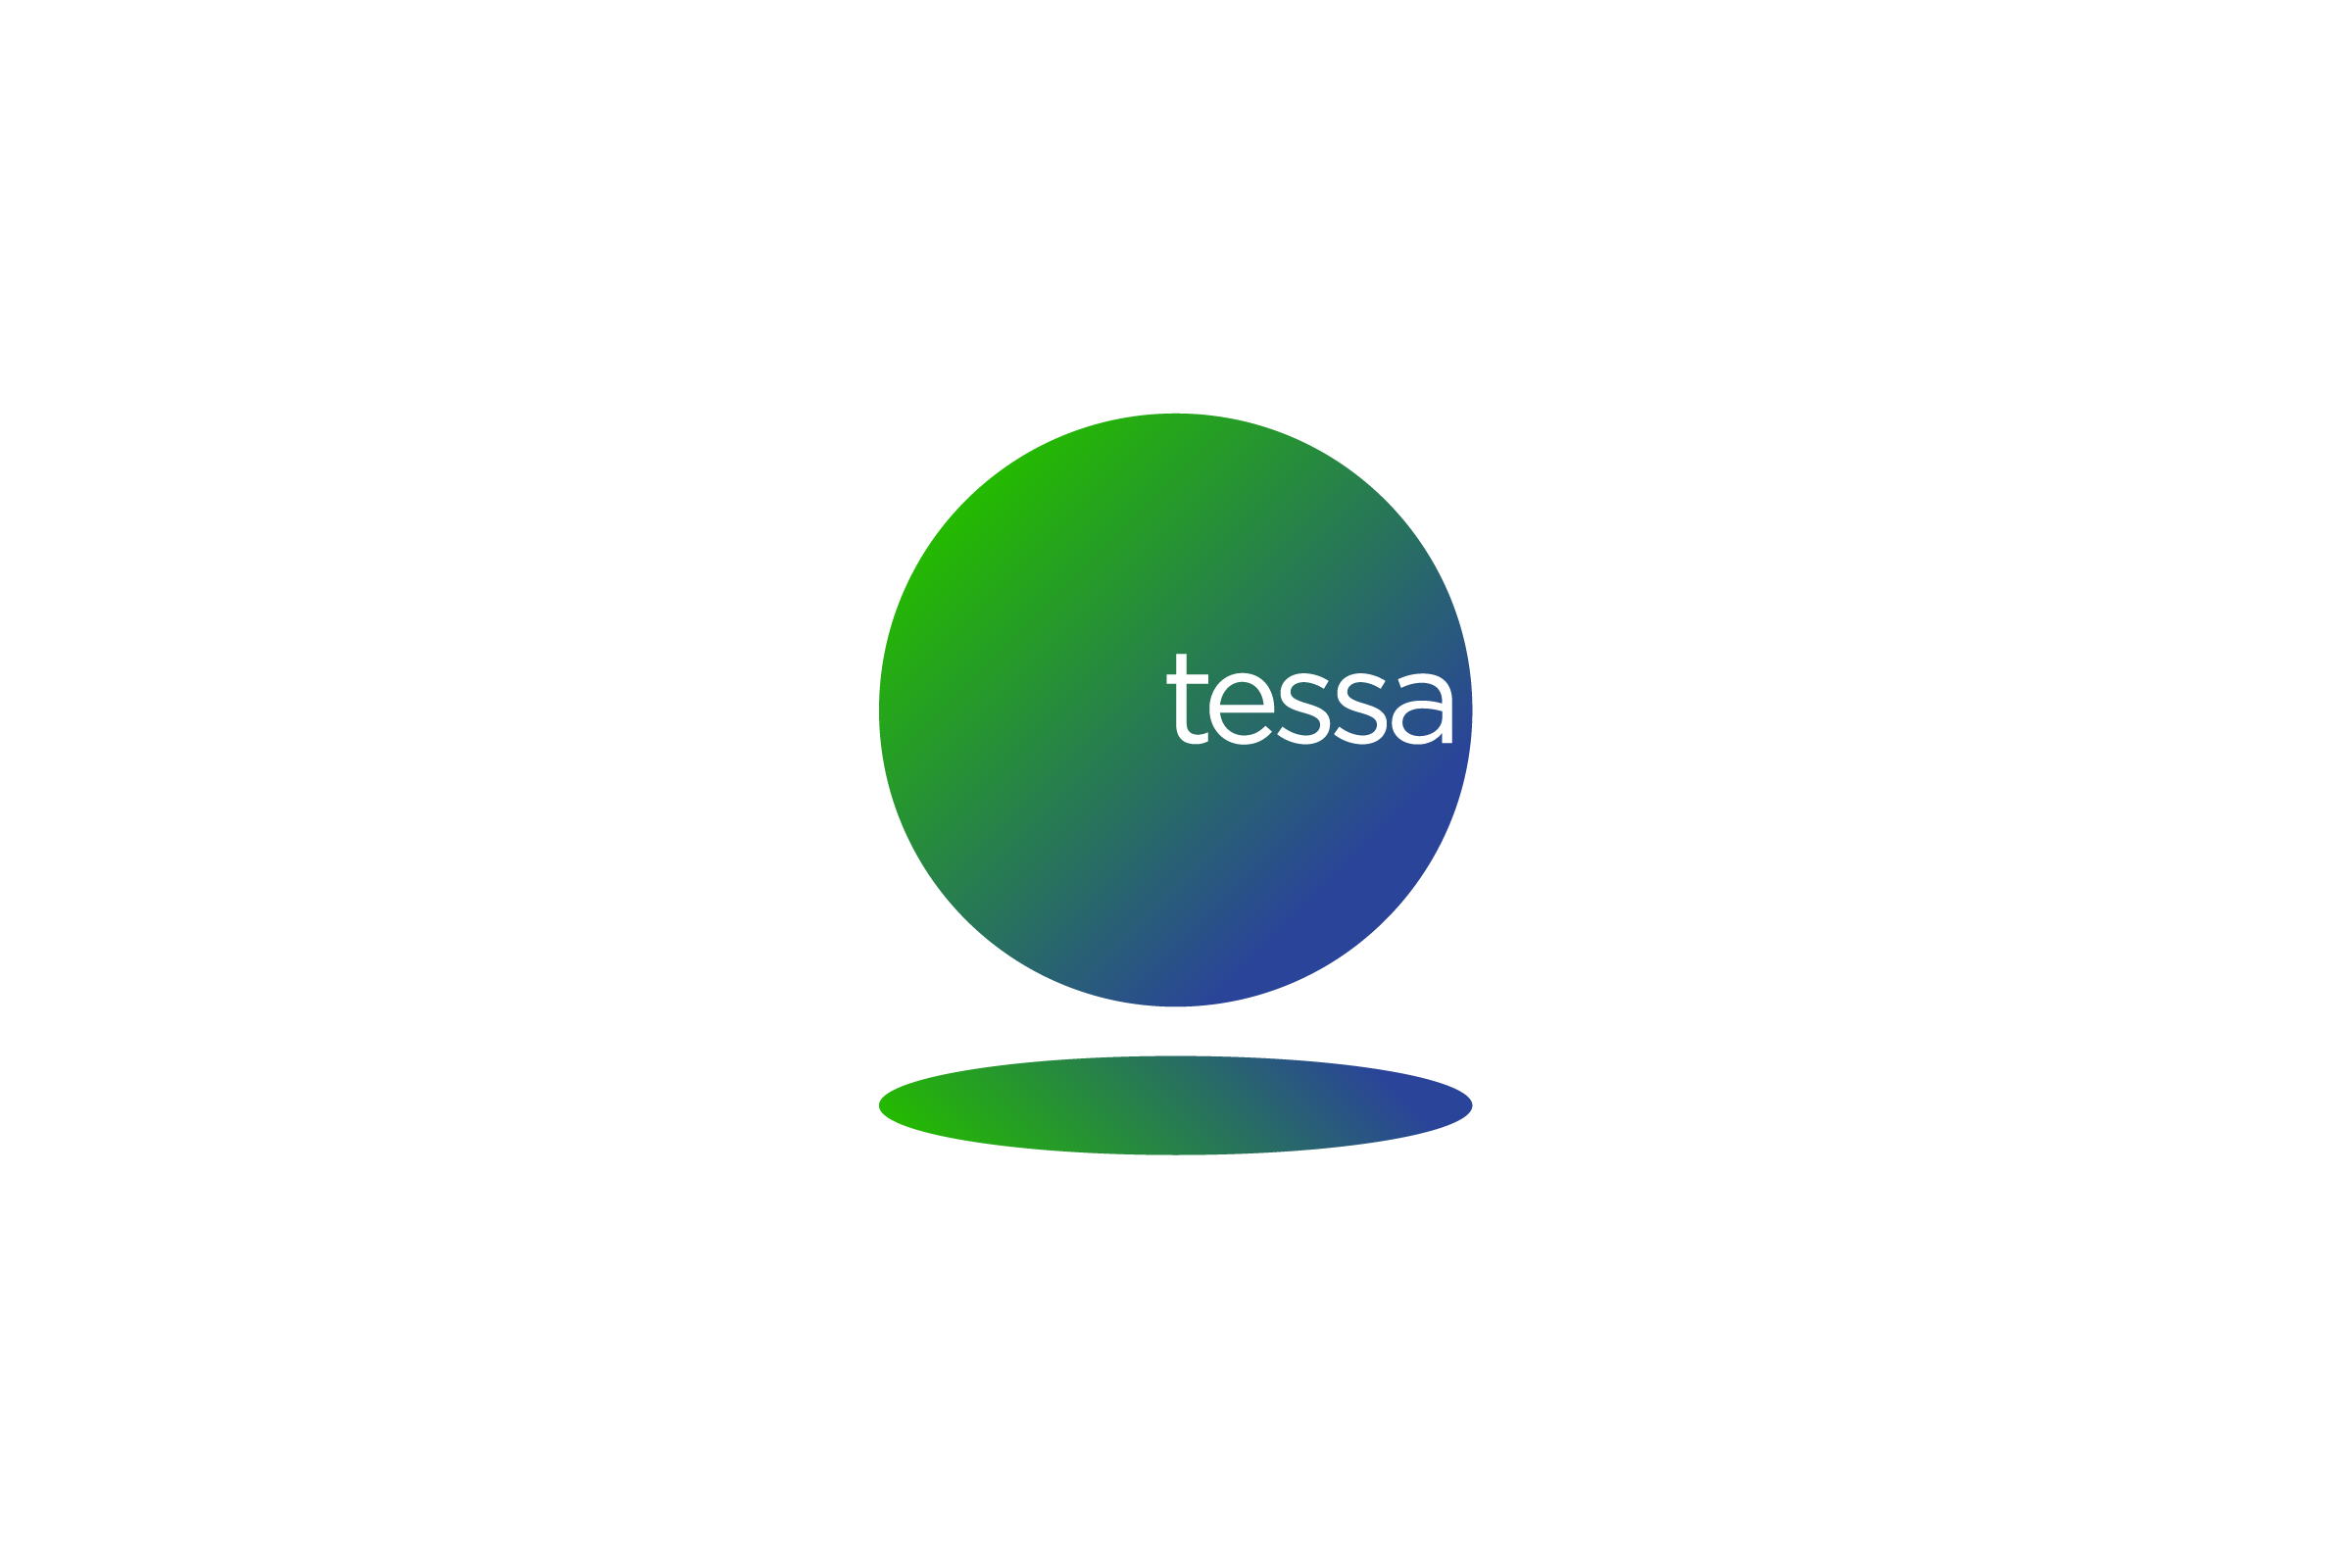 Tessa branding by Peek Creative Limited